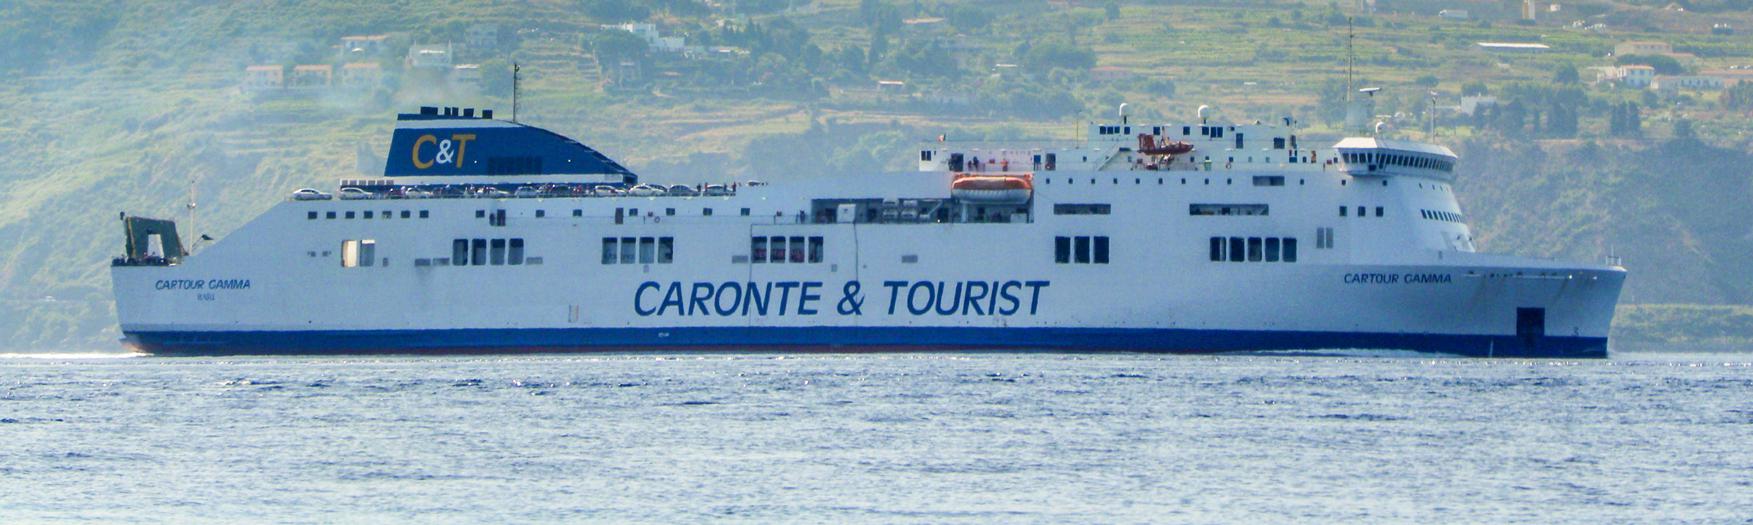 caronte & tourist messina port